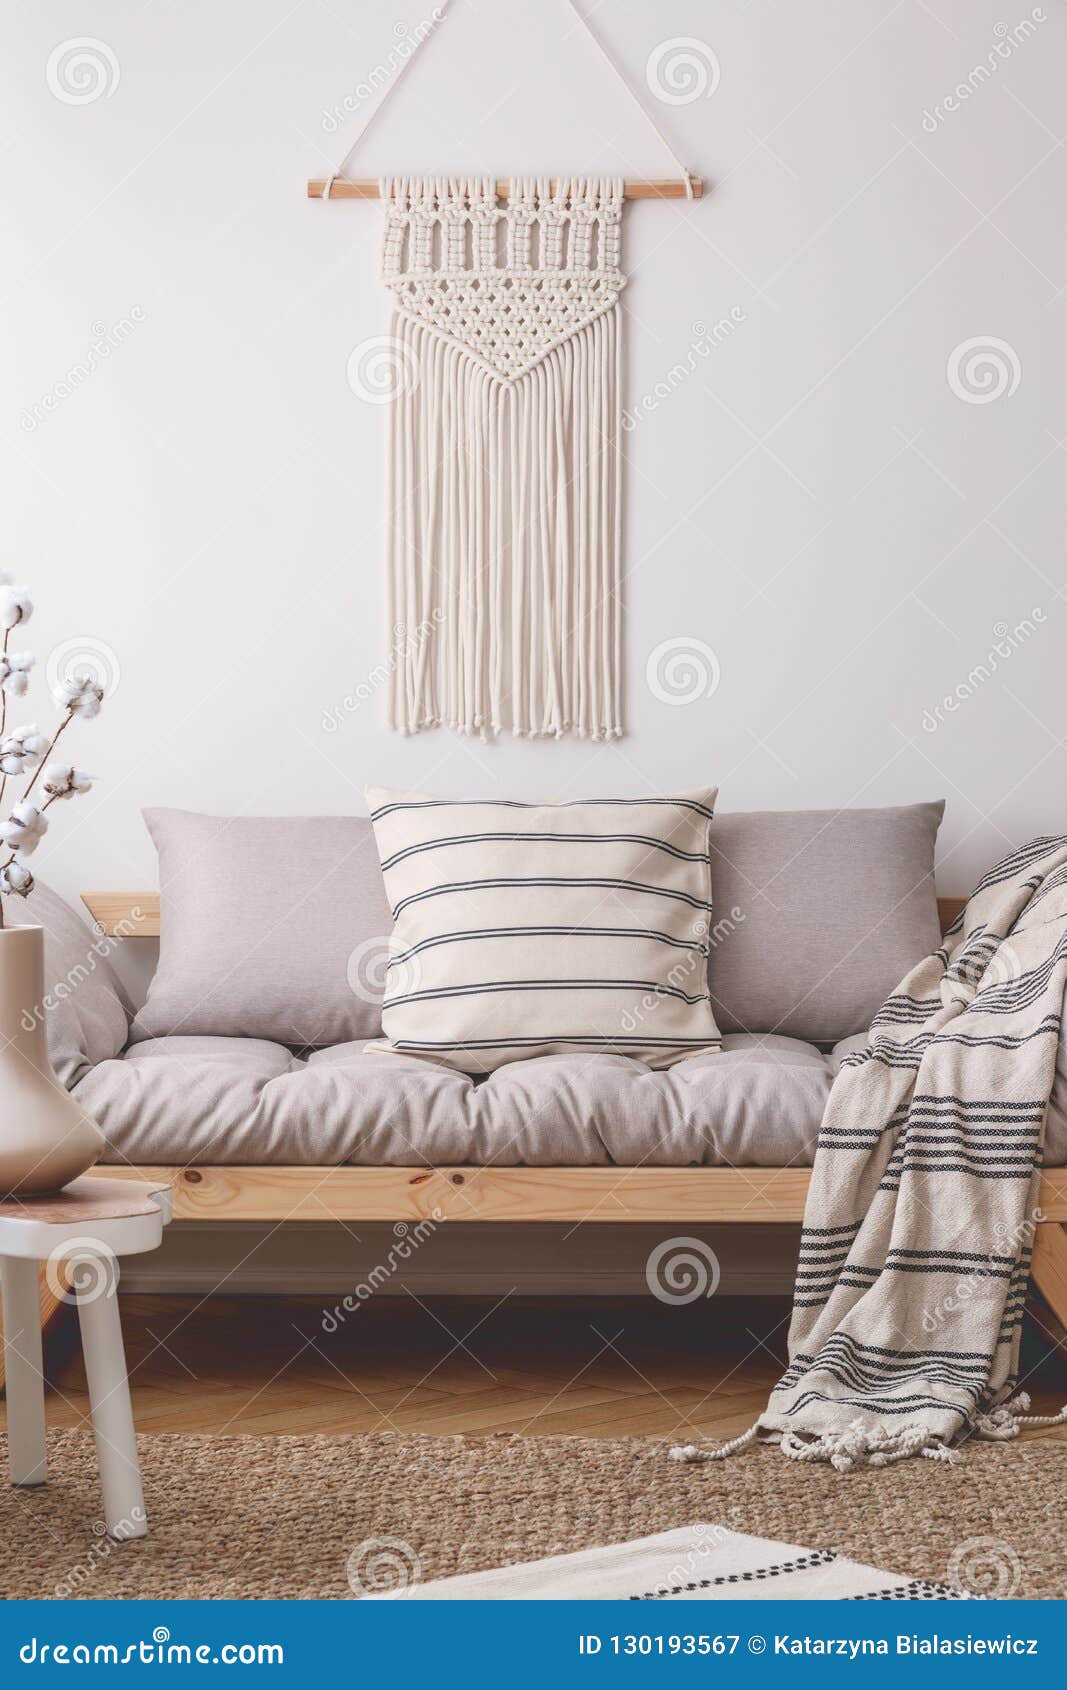 White Handmade Macrame Above Comfortable Beige Living Room 